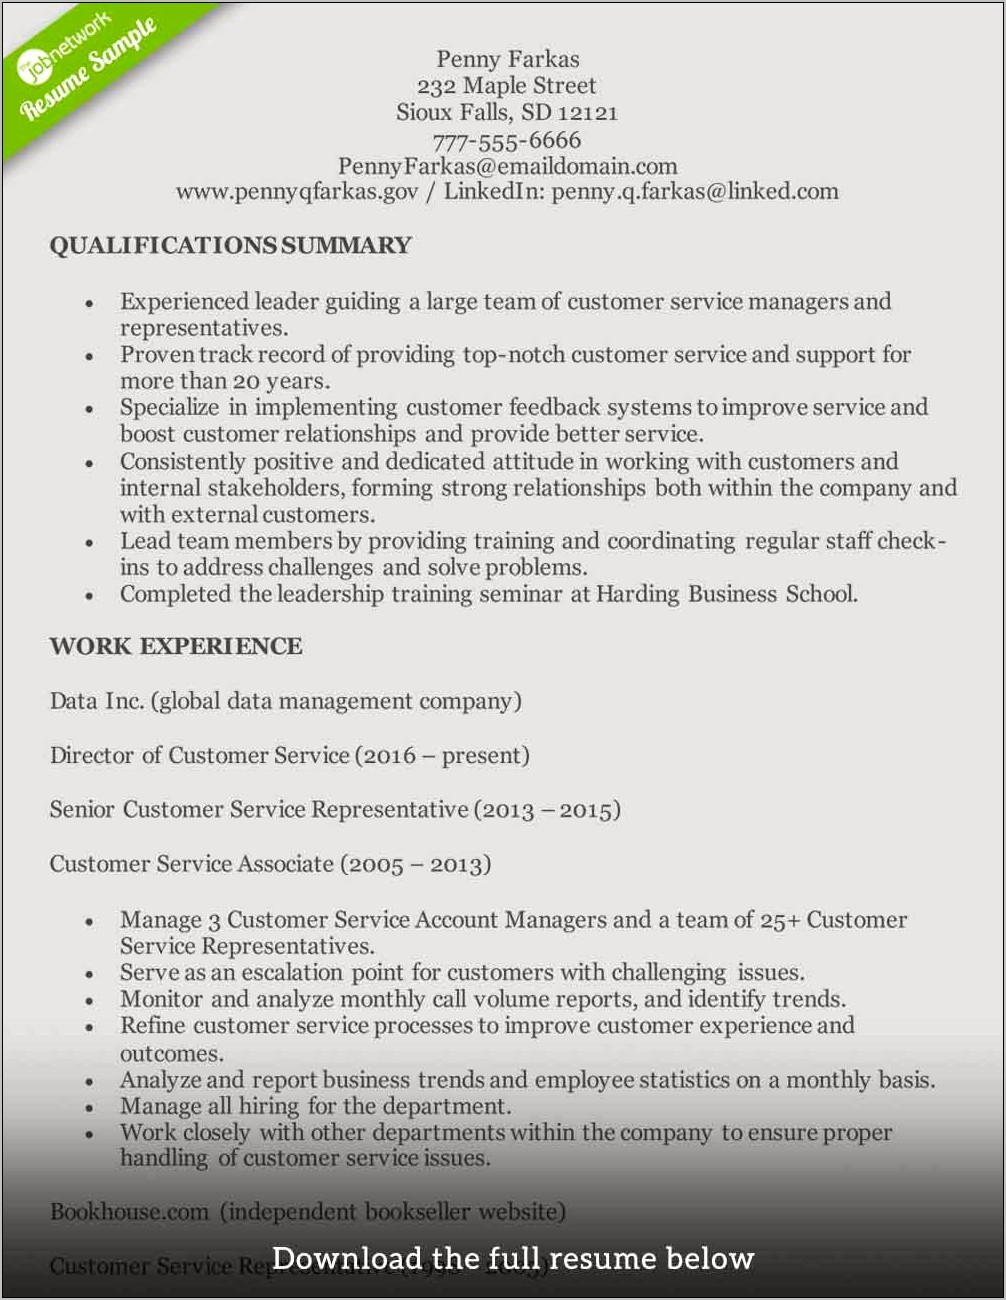 Resume Job Description For Customer Service